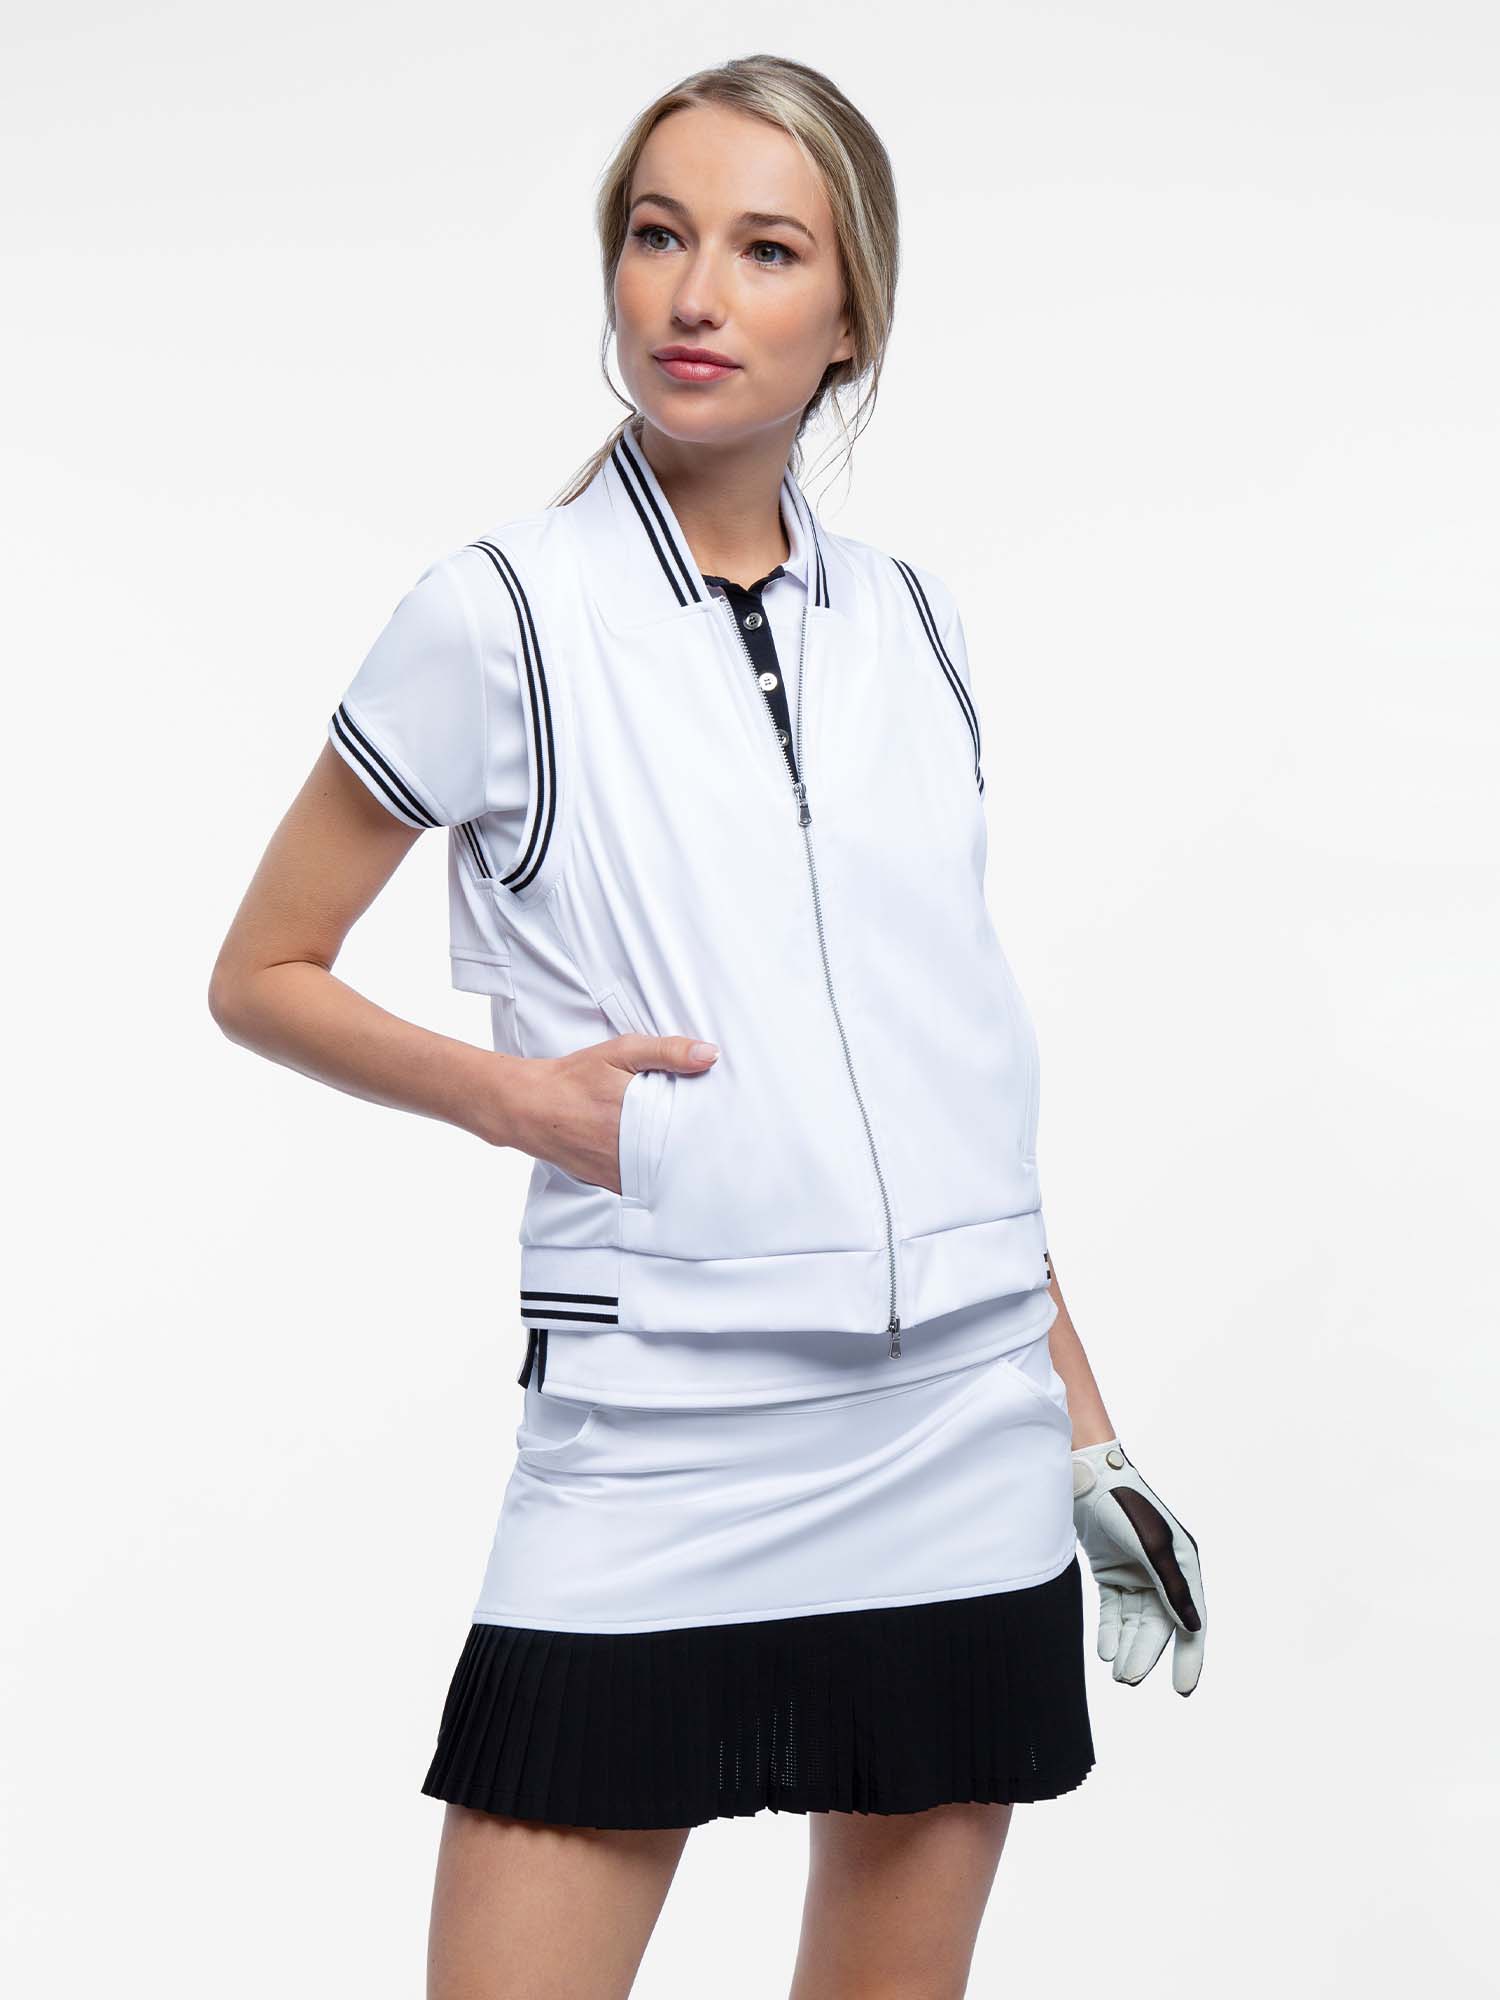 Aubrey Lifestyle Vest - White/Black